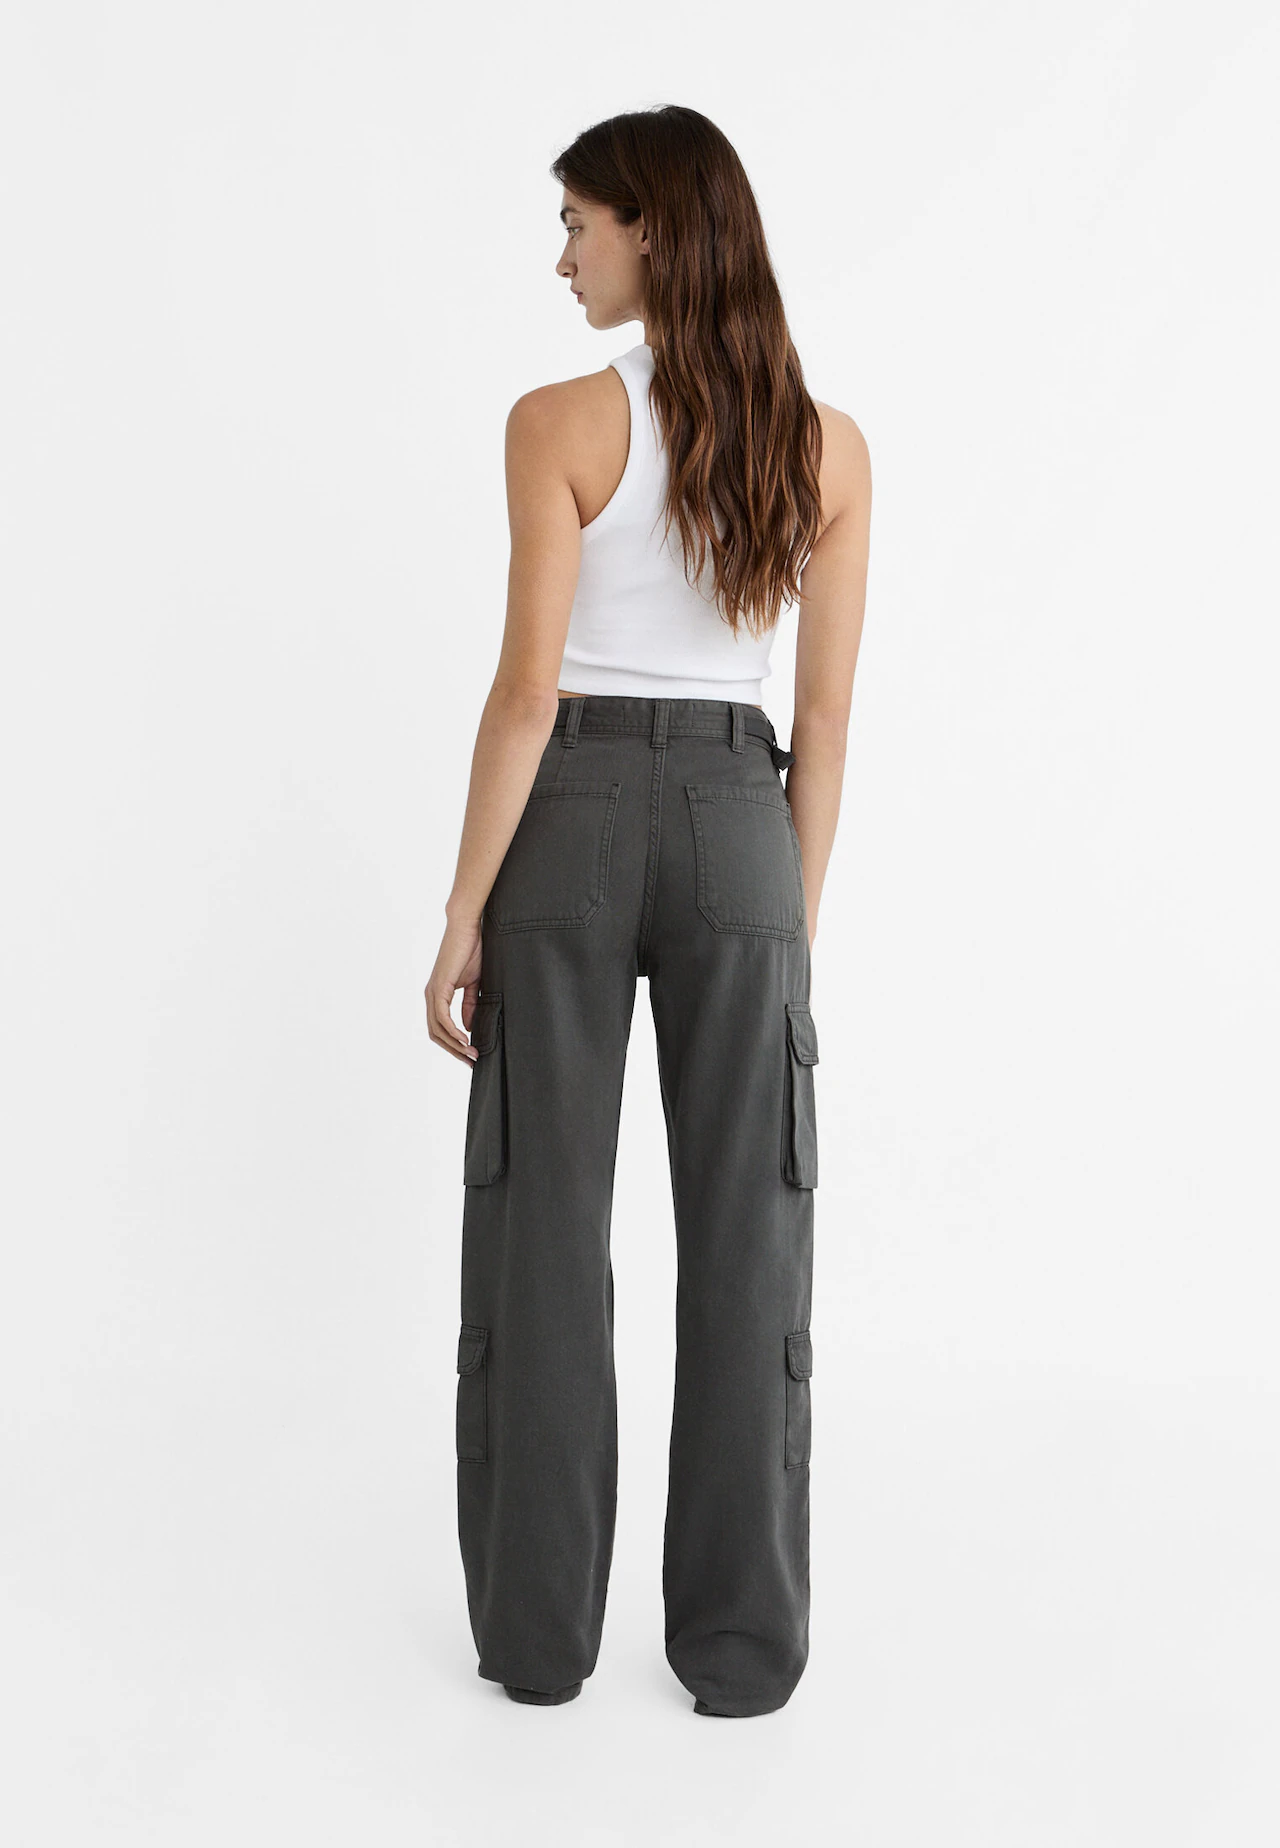 Adjustable waist cargo trousers - Women's fashion